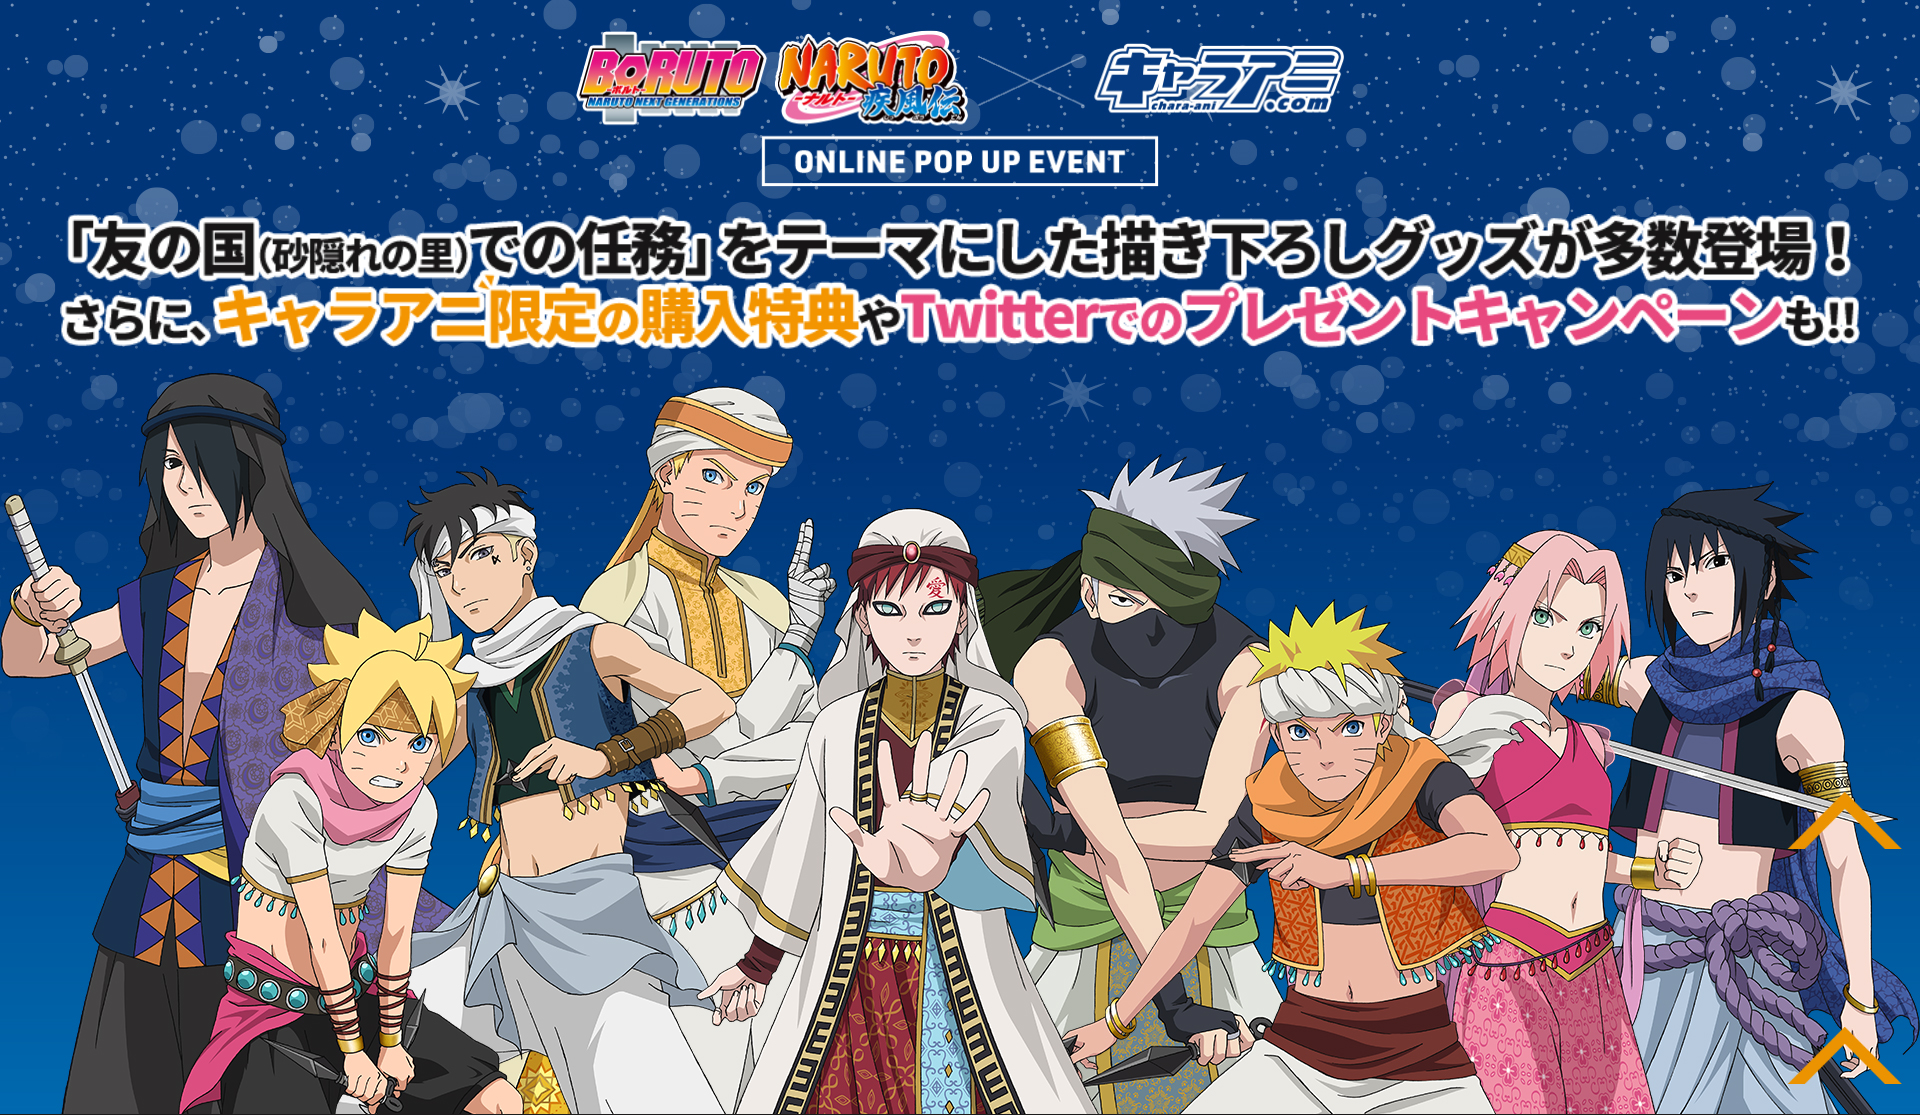 Naruto ナルト 疾風伝 Boruto ボルト Naruto Next Generations オンラインポップアップショップ イベント第三弾が開催決定 イベント商品の予約も受付開始 株式会社kadokawaのプレスリリース